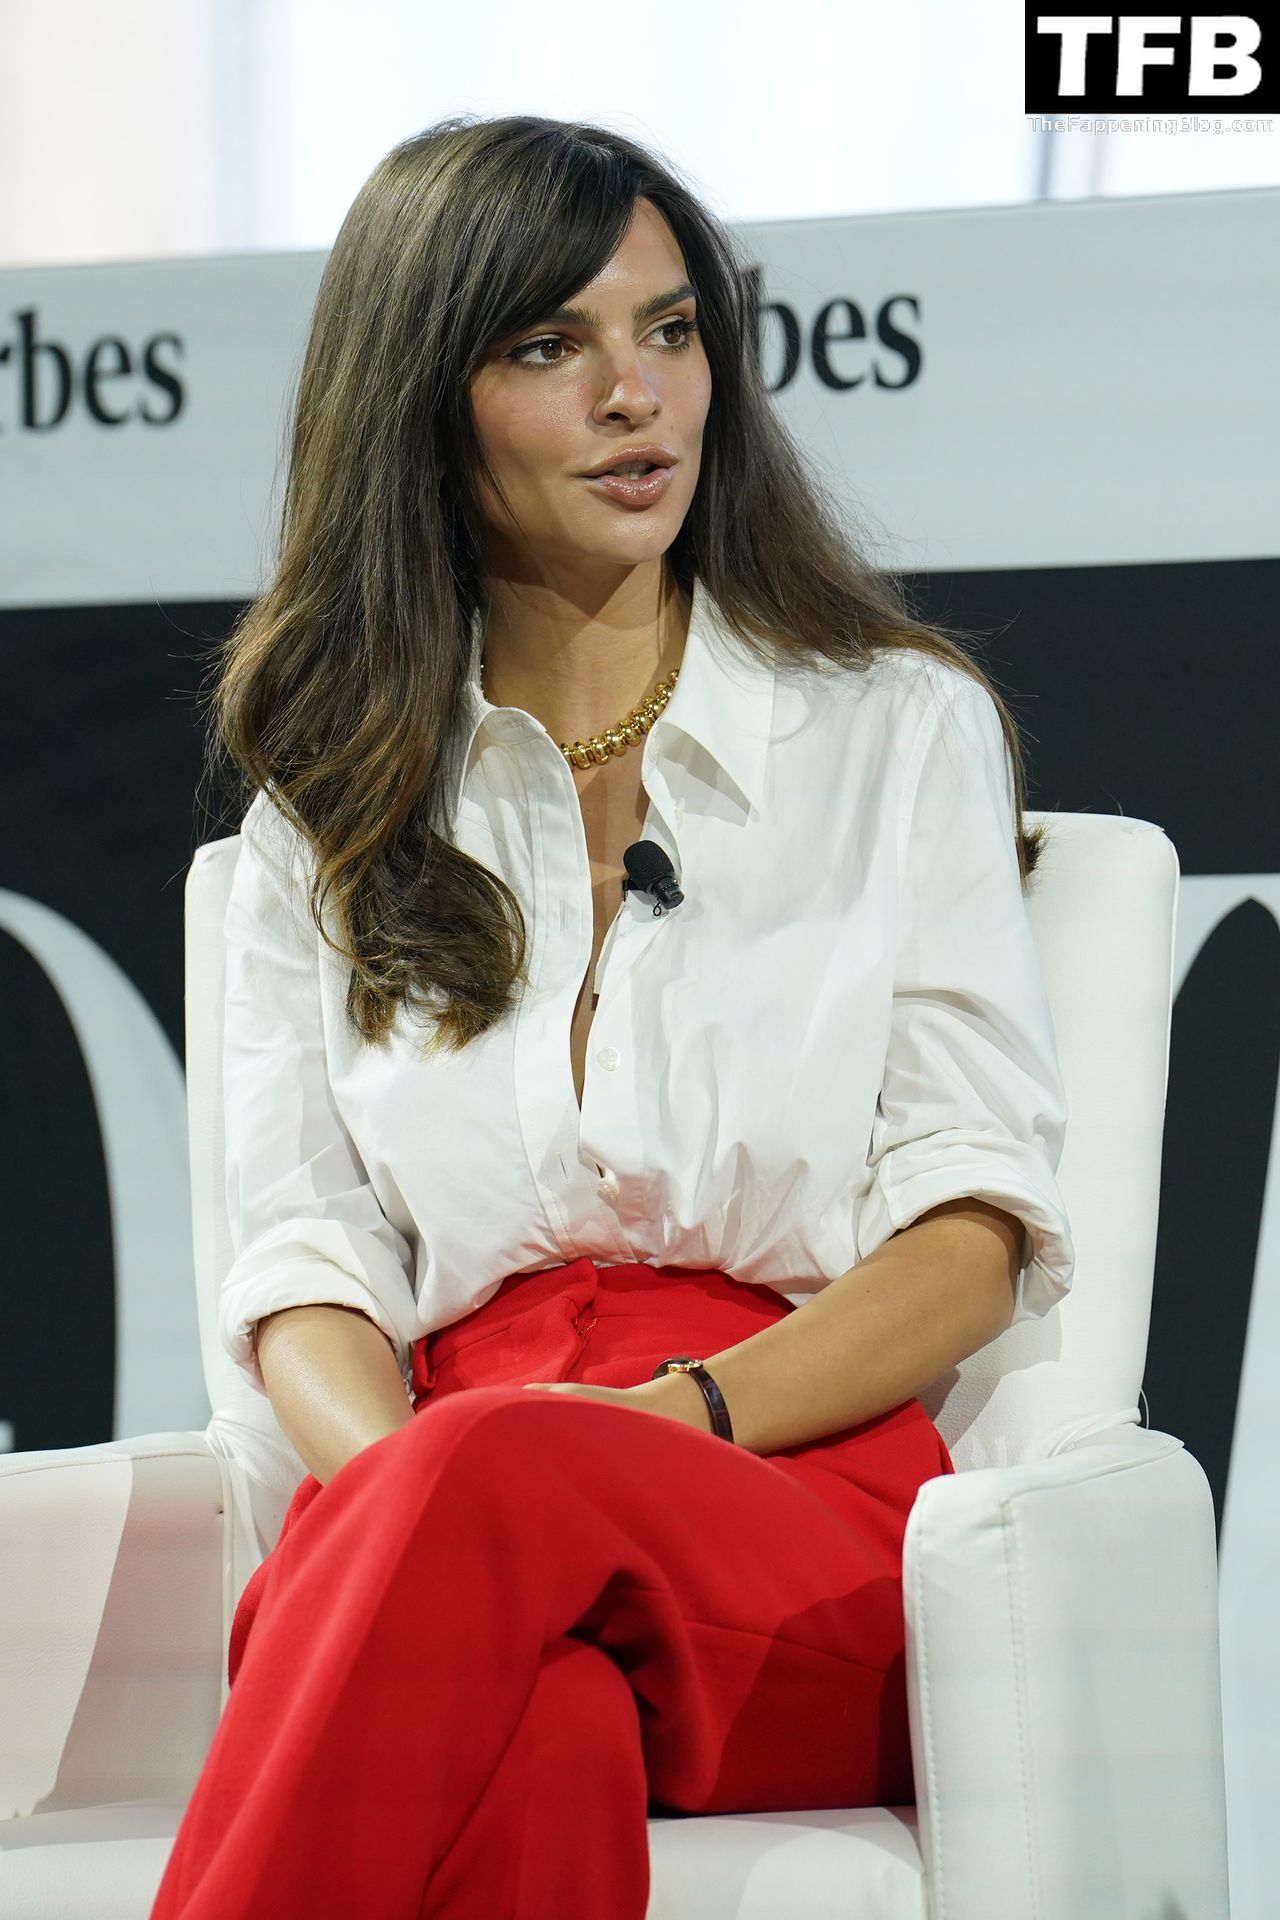 Emily Ratajkowski Sexy The Fappening Blog 56 - Newly Single Emily Ratajkowski Attends Forbes Power Women’s Summit in NYC (66 Photos)